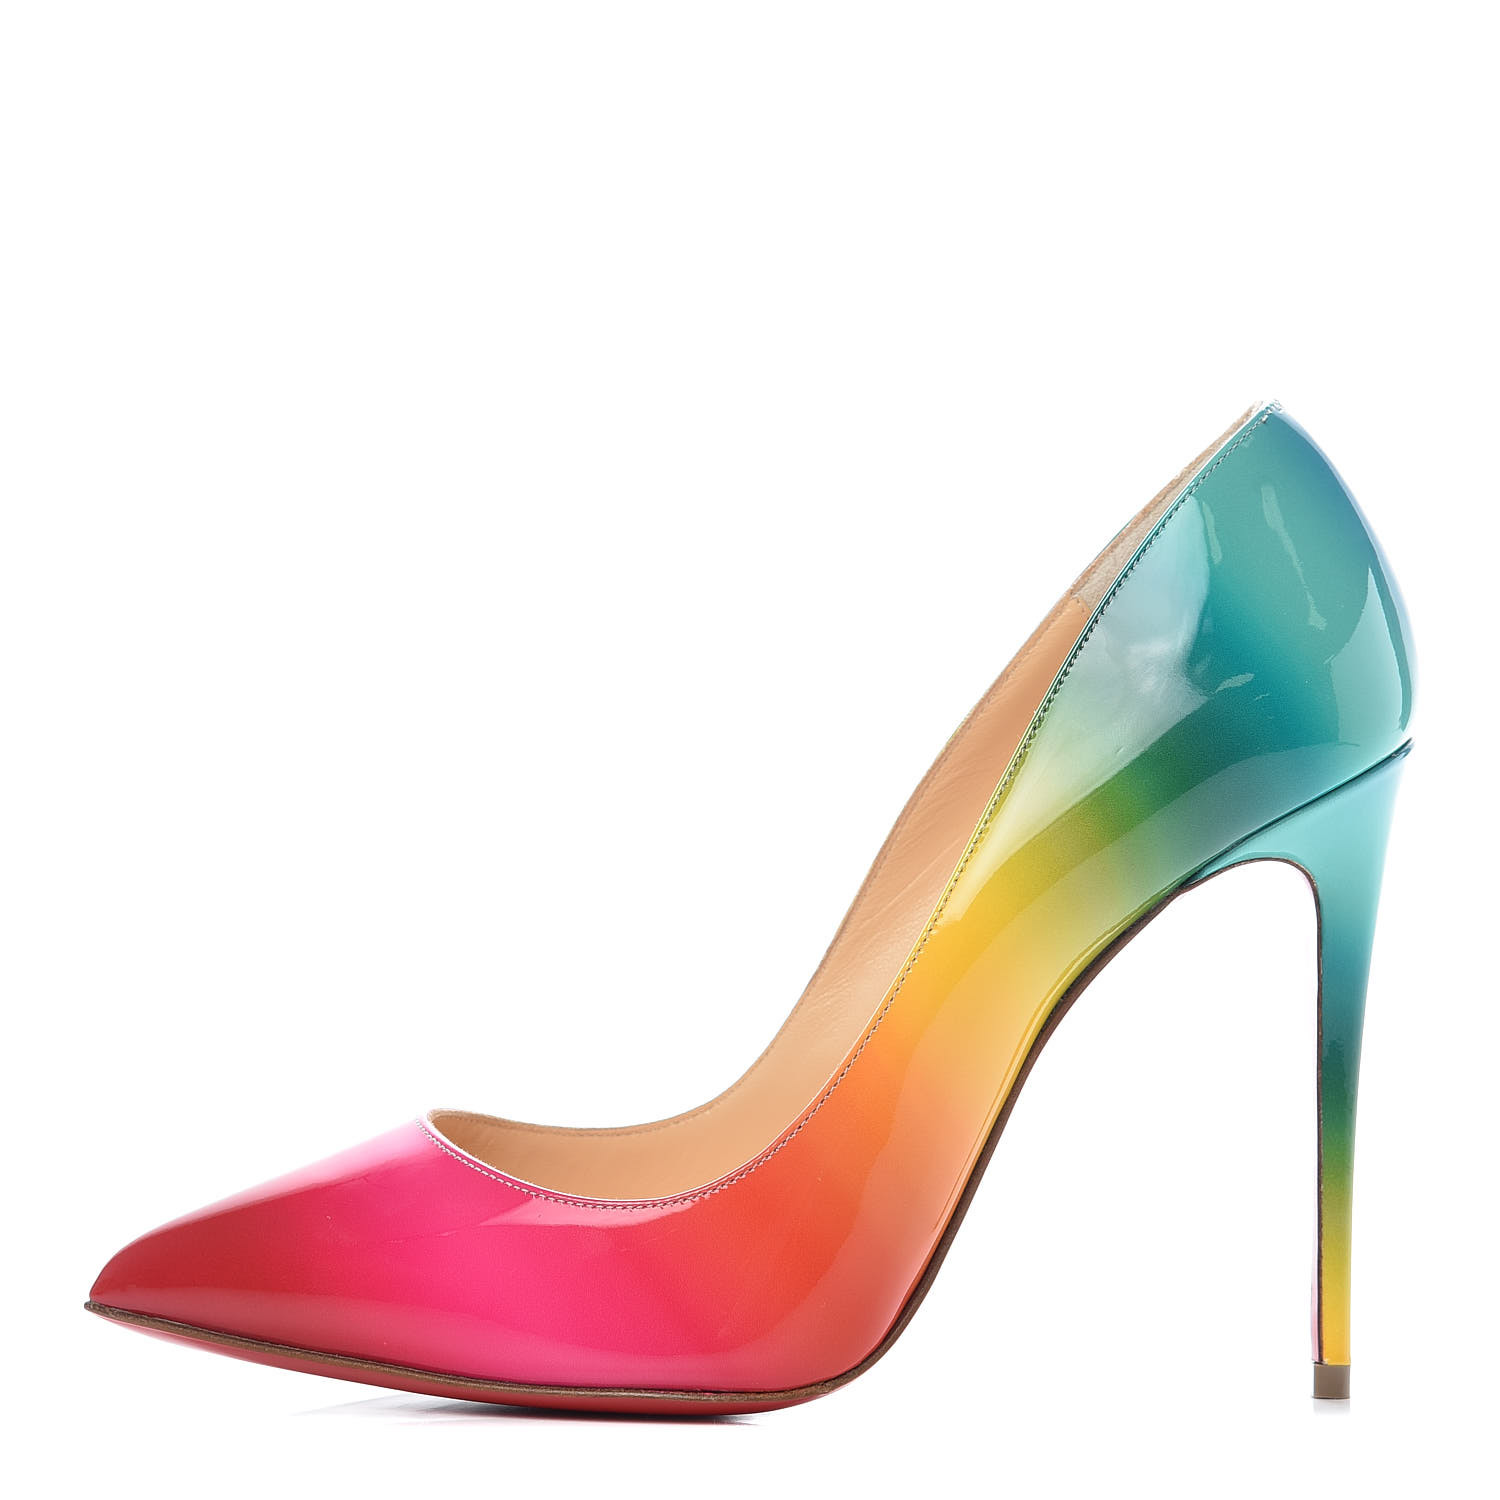 christian louboutin rainbow heels